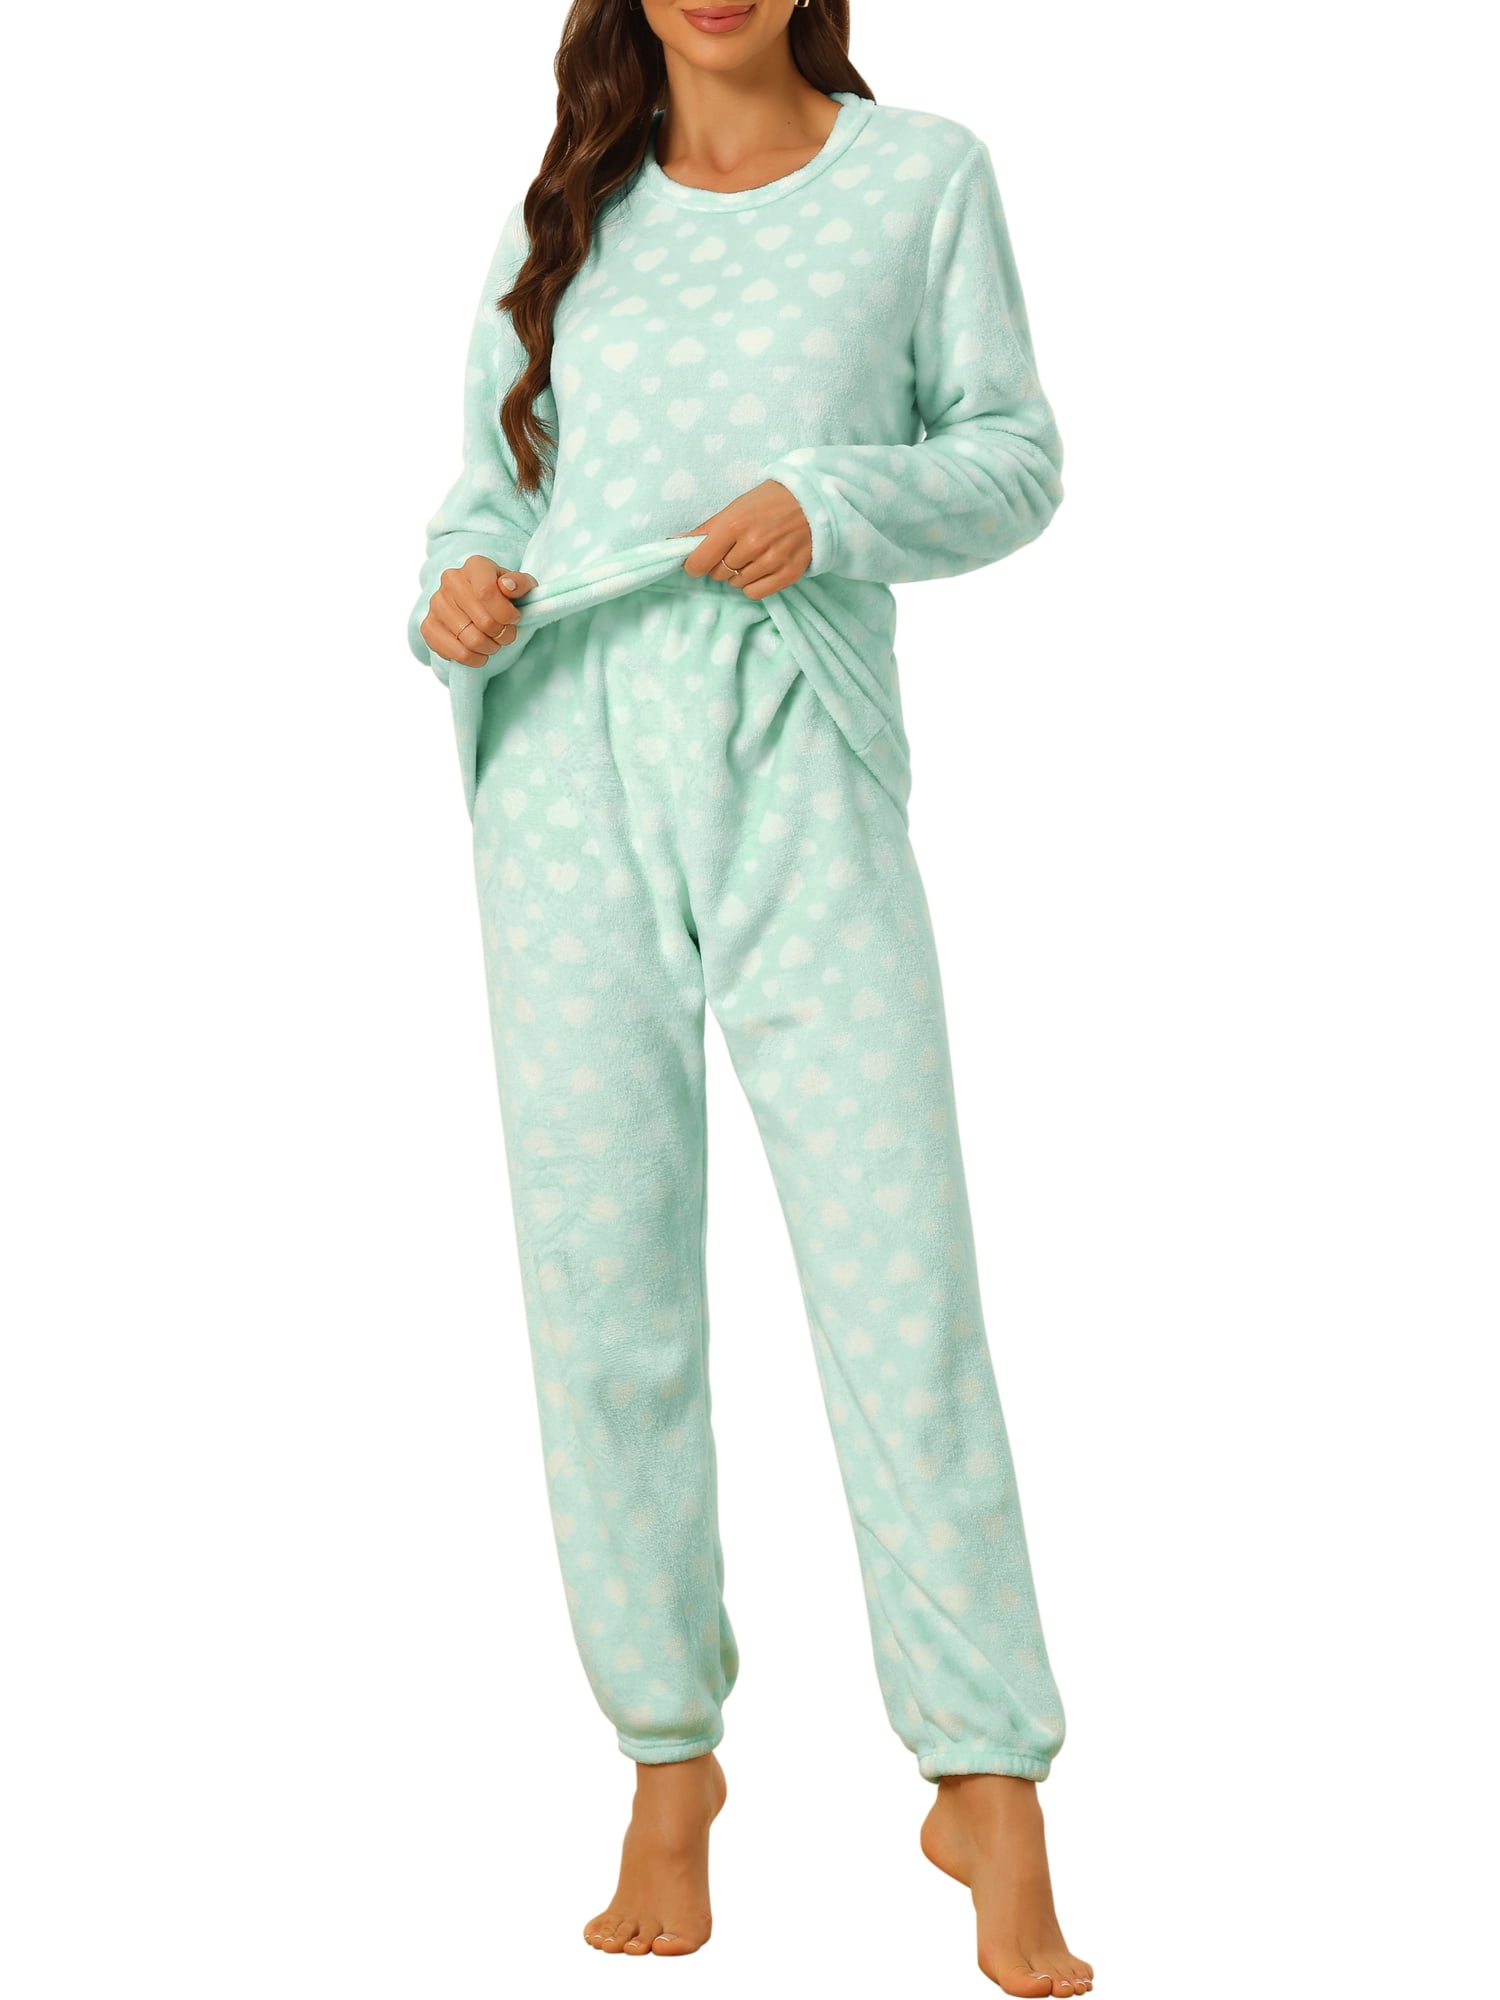 JFMTHS Winter Thick Warm Flannel Pajamas Sets For Women Sleepwear